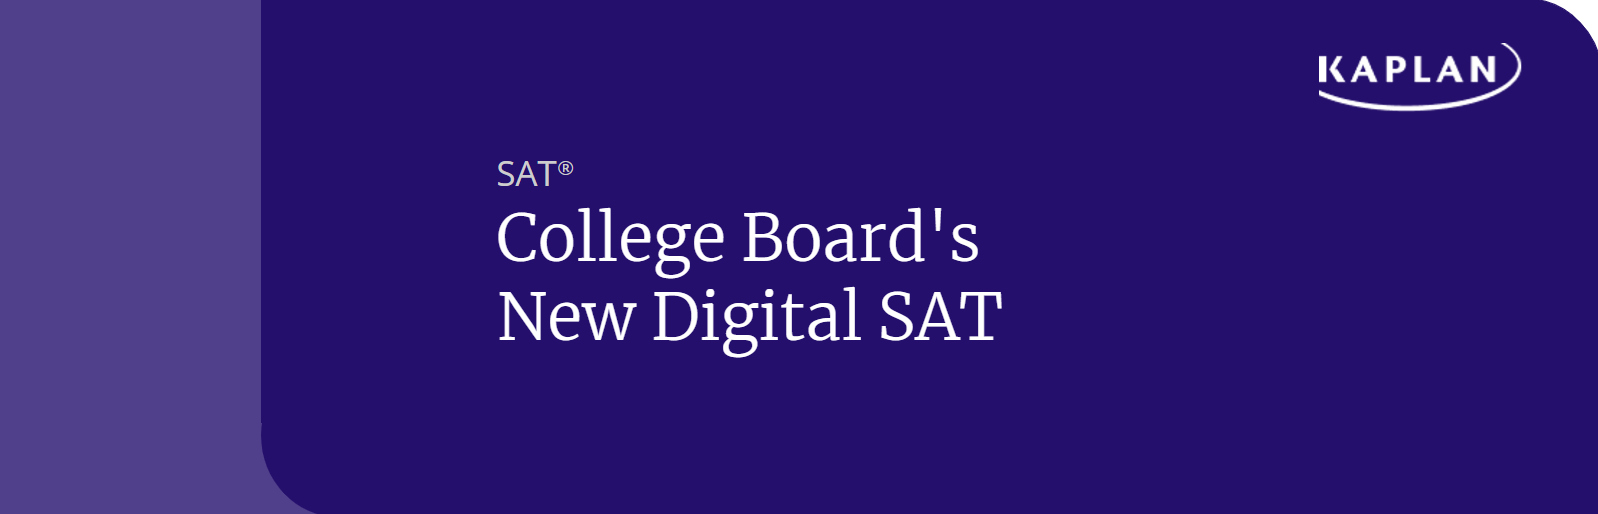 College Board's New Digital SAT